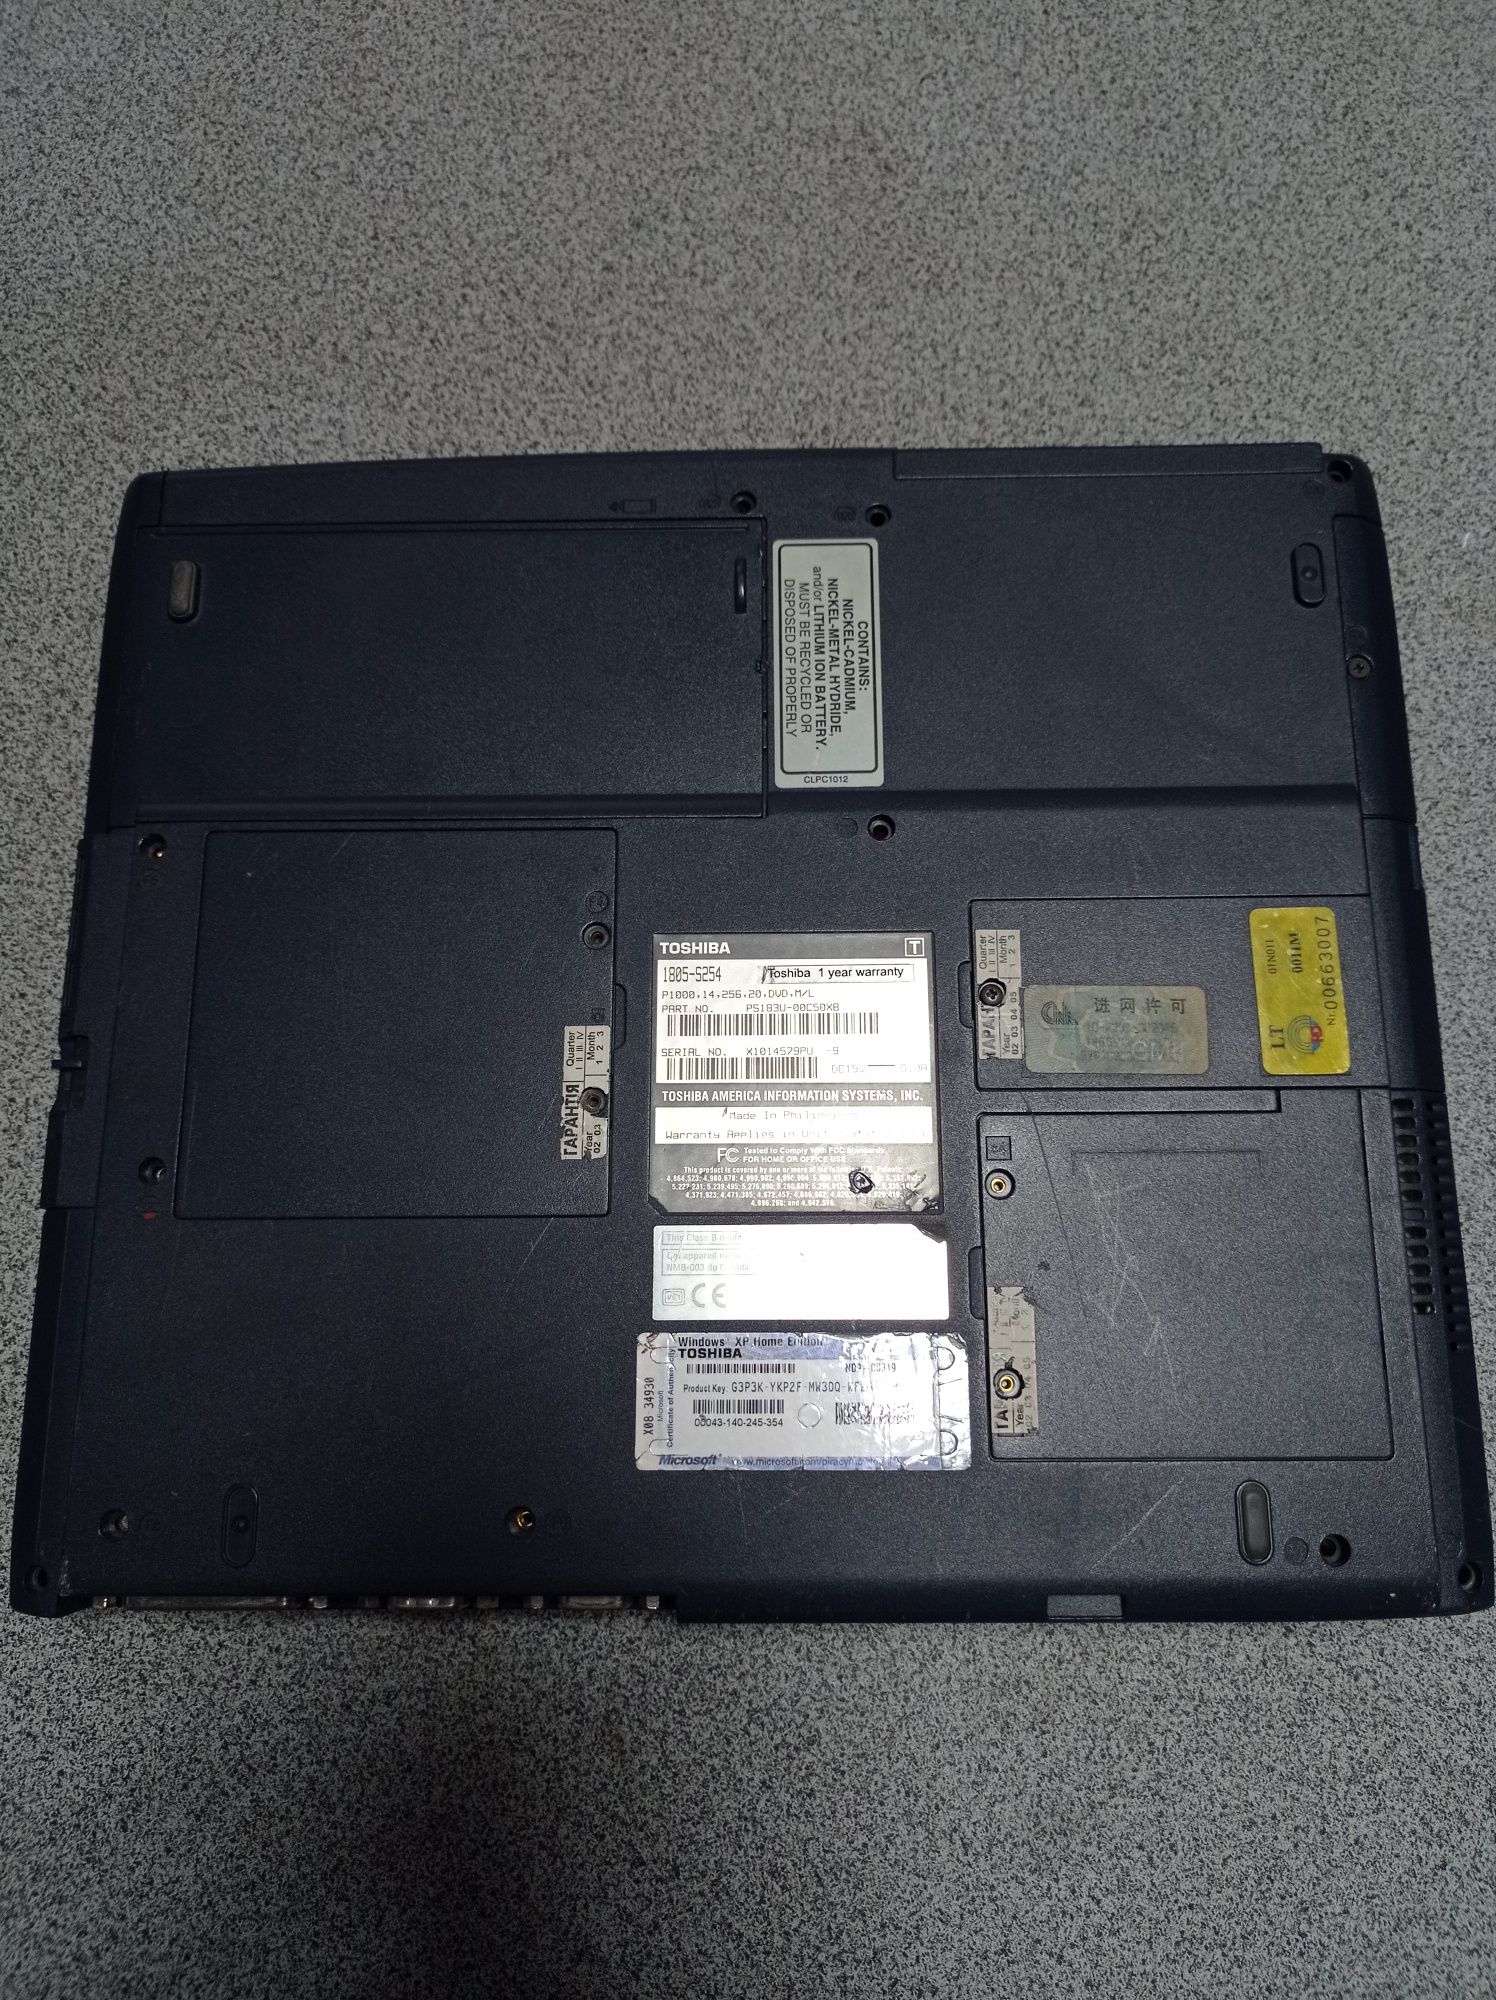 Ноутбук Toshiba Satellite 1805-S254 с наклейкой Windows